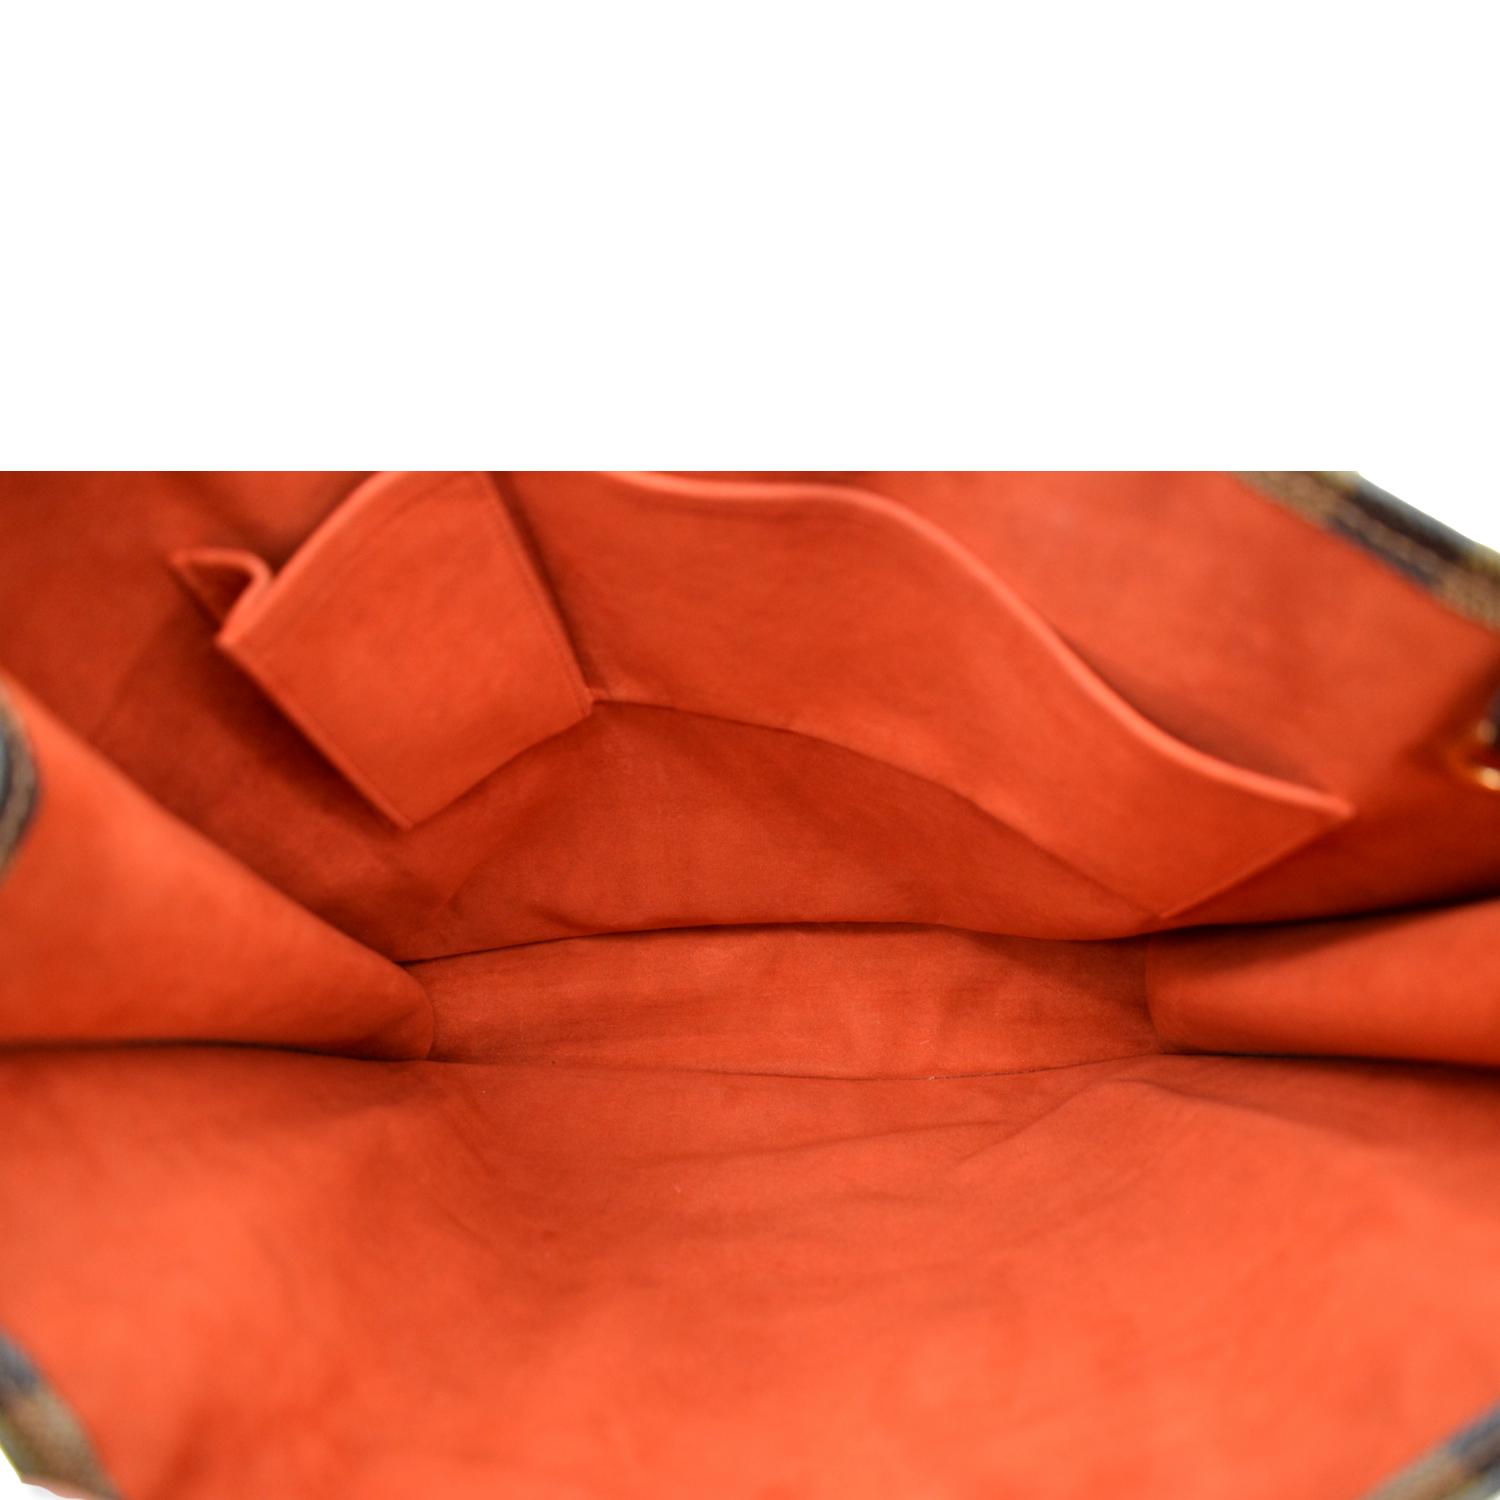 Louis Vuitton Orange Tote Bags